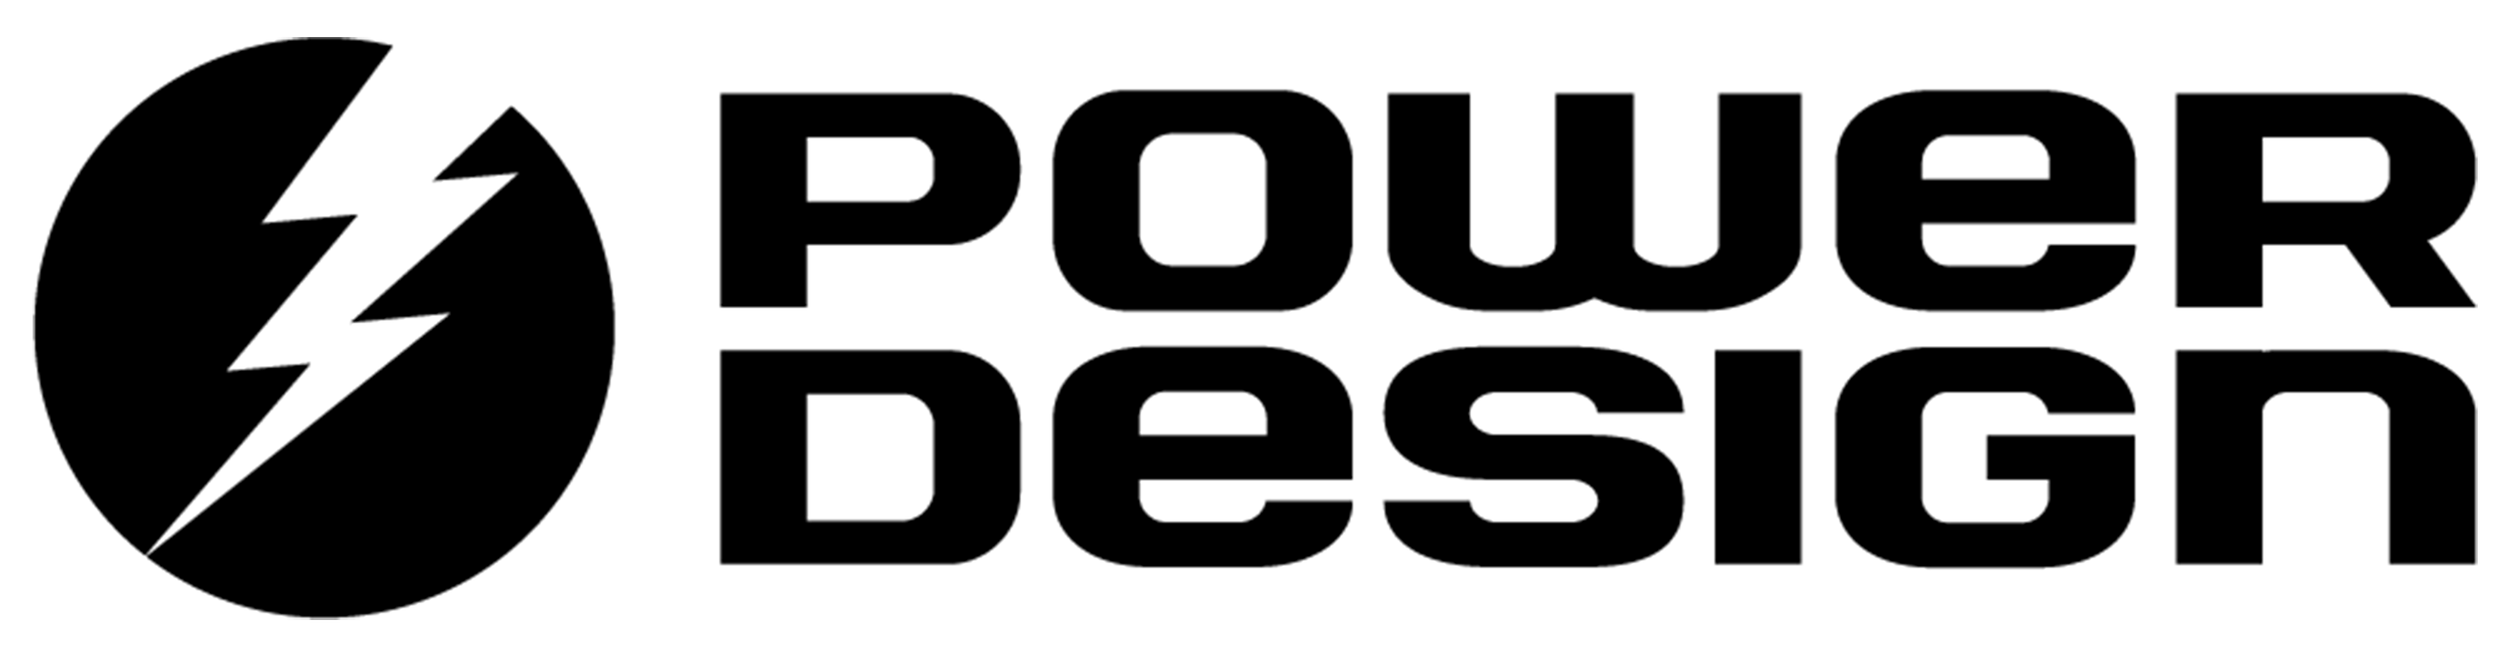 Power-Design-Logo-Black.png